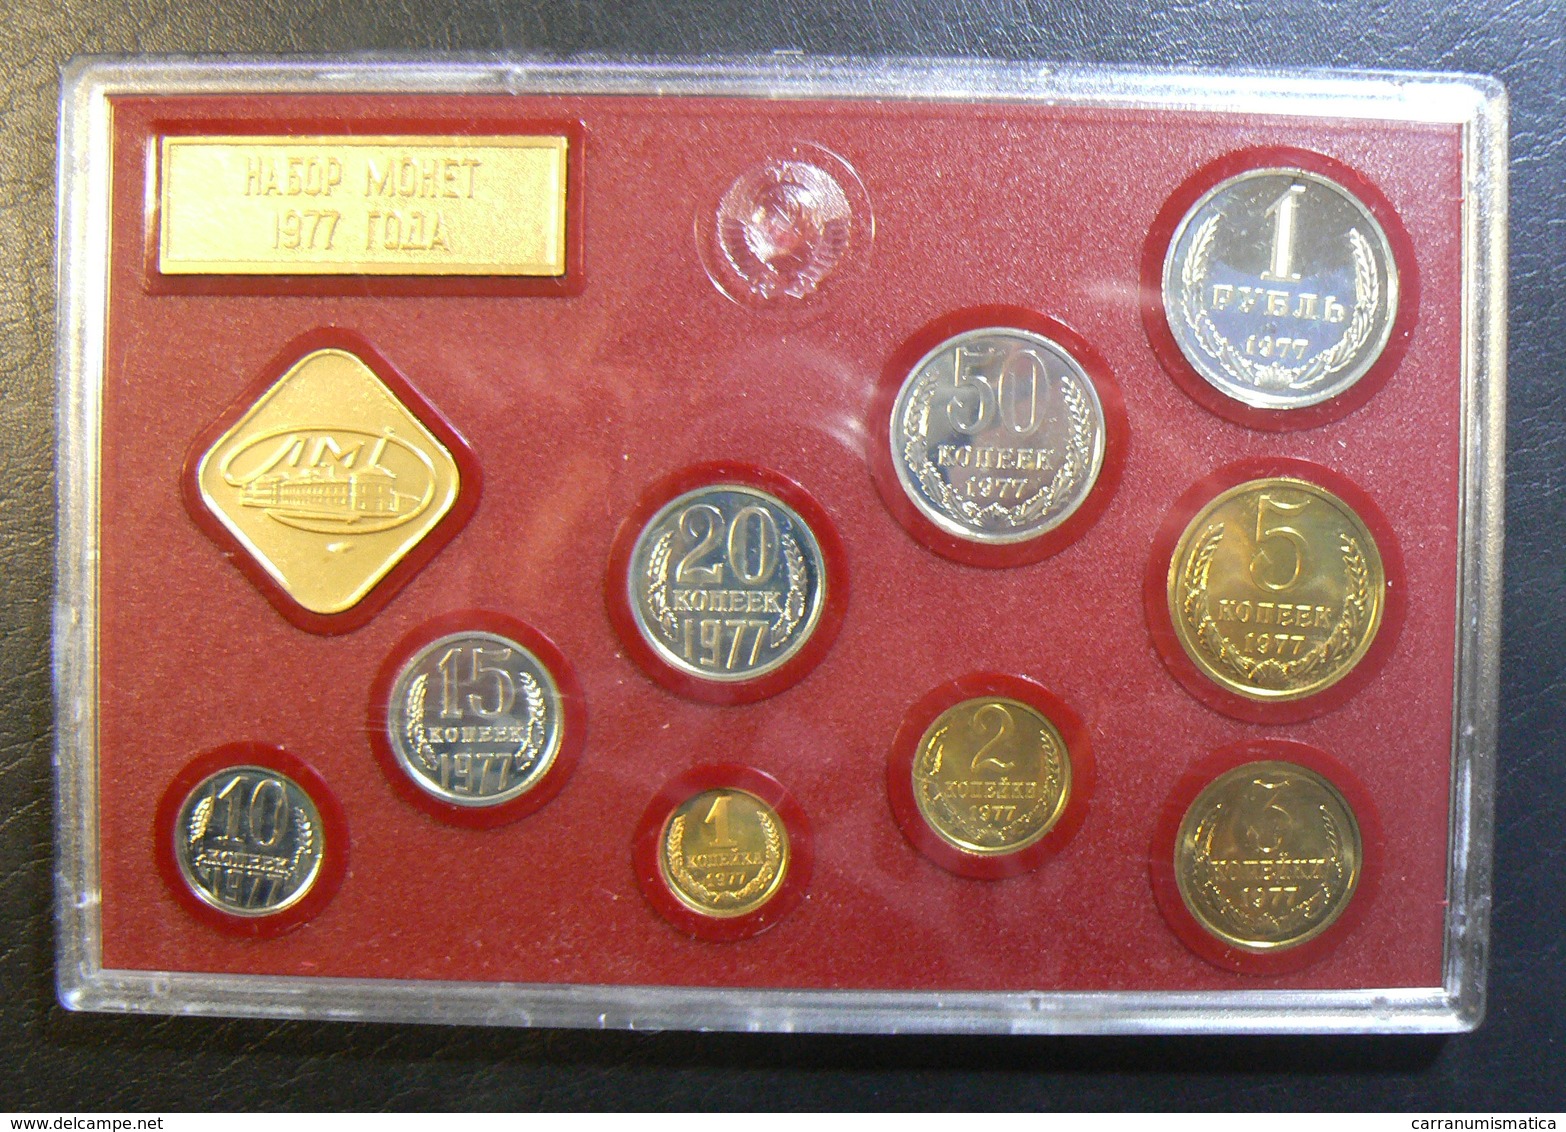 [NC] Russia - Divisionale 1977 - Leningrad Mint - Con Custodia Originale. - Russia